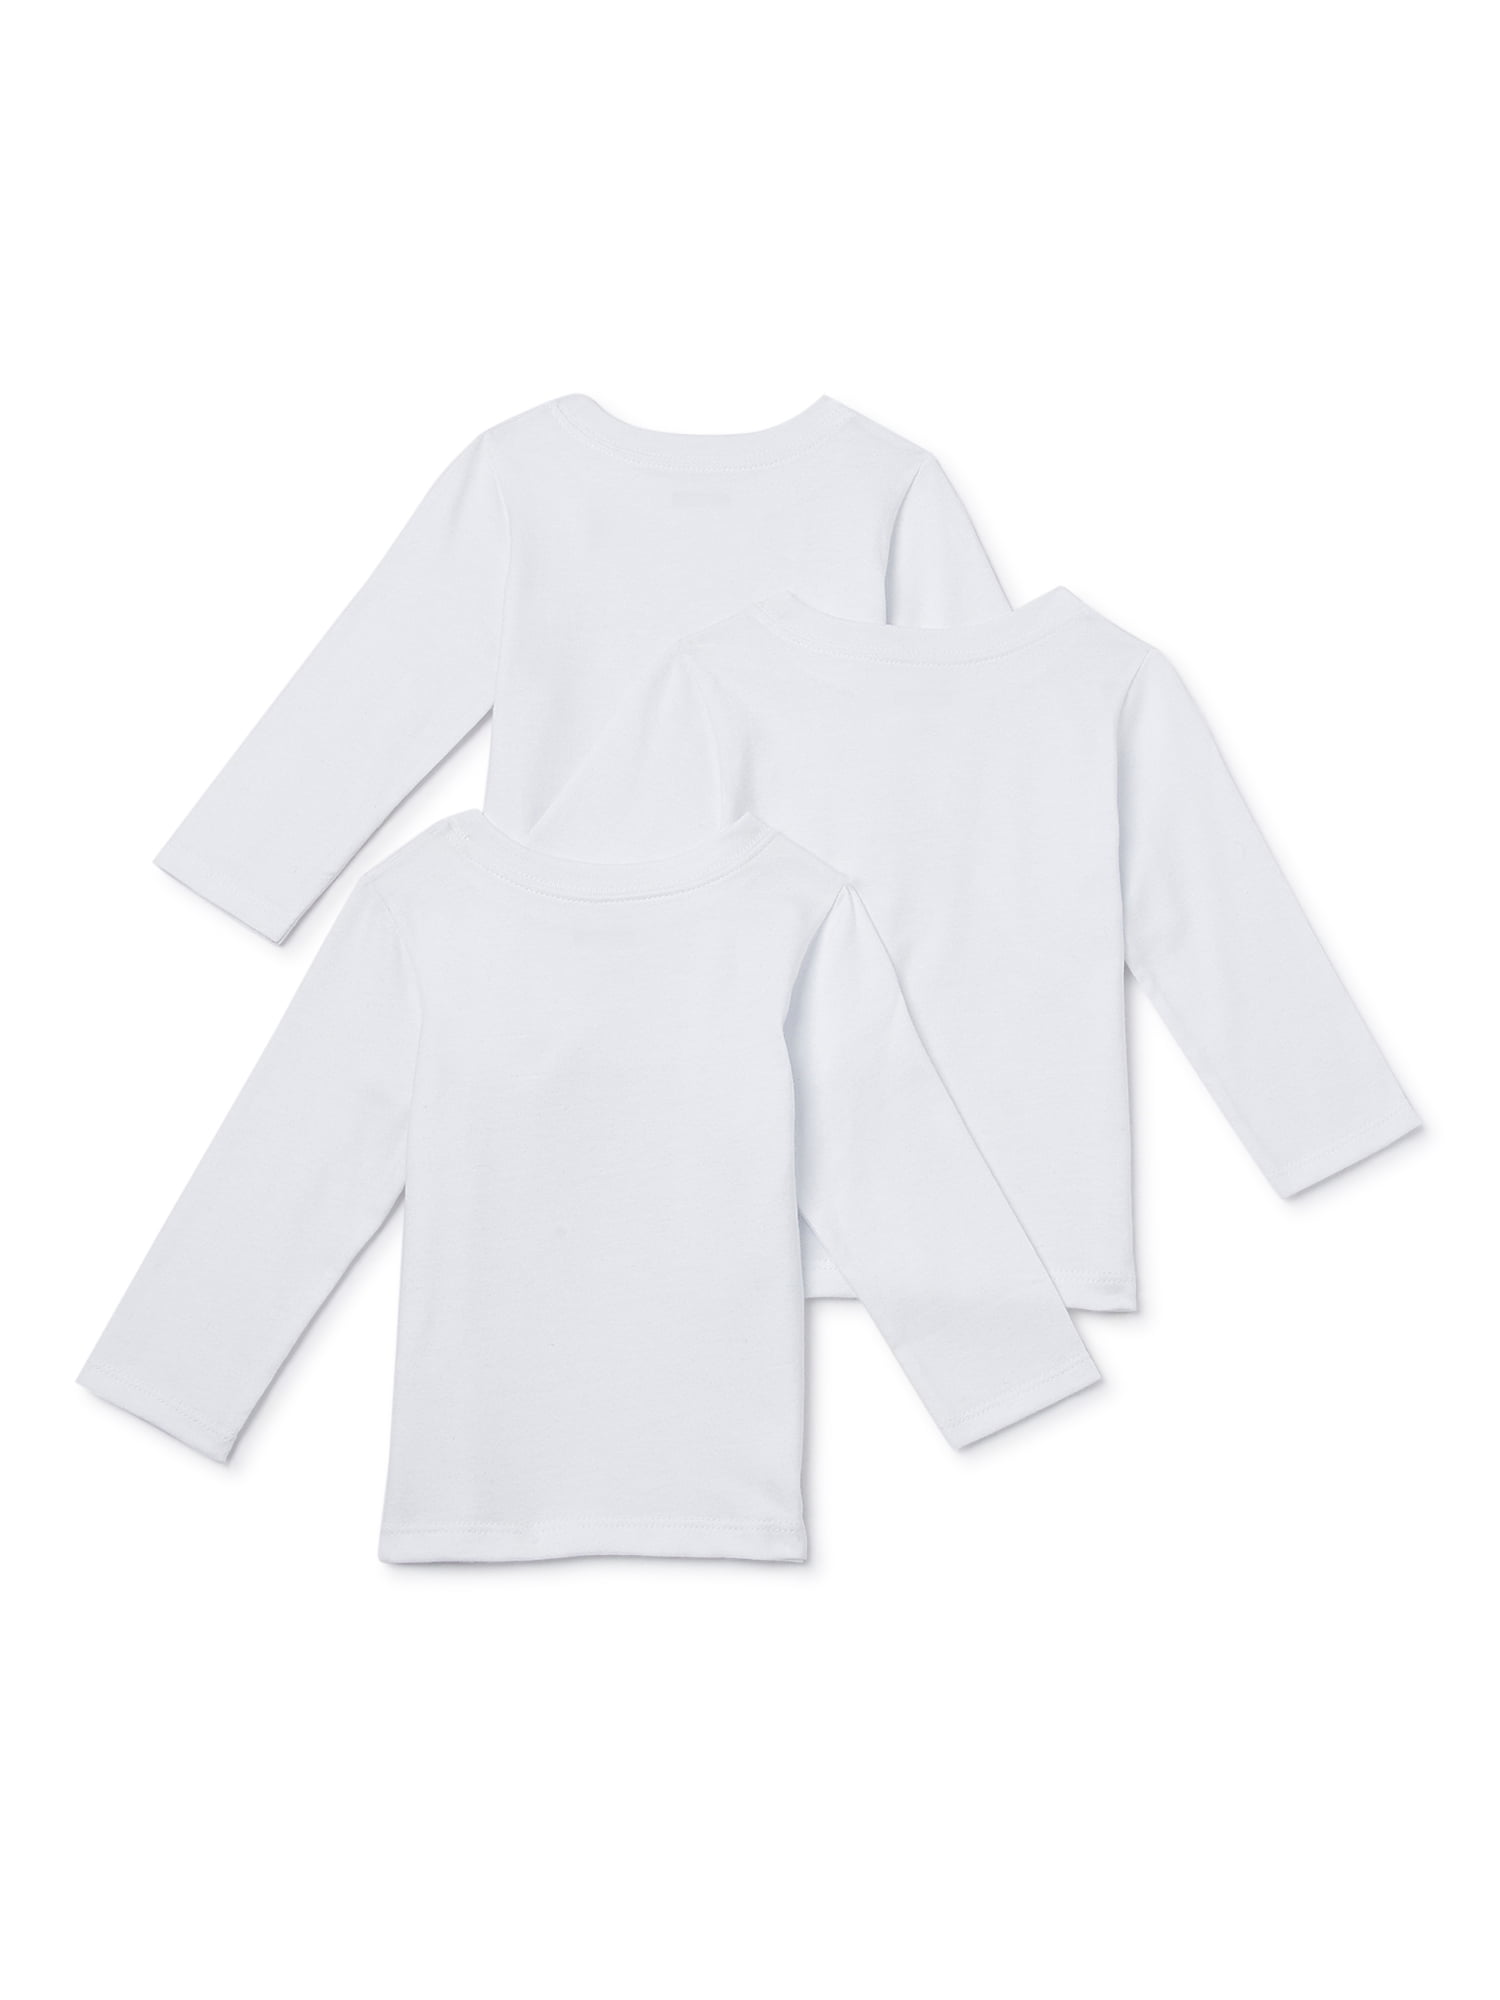 Garanimals Baby Boys Basic Long Sleeve T-Shirt Multipack Set, 3